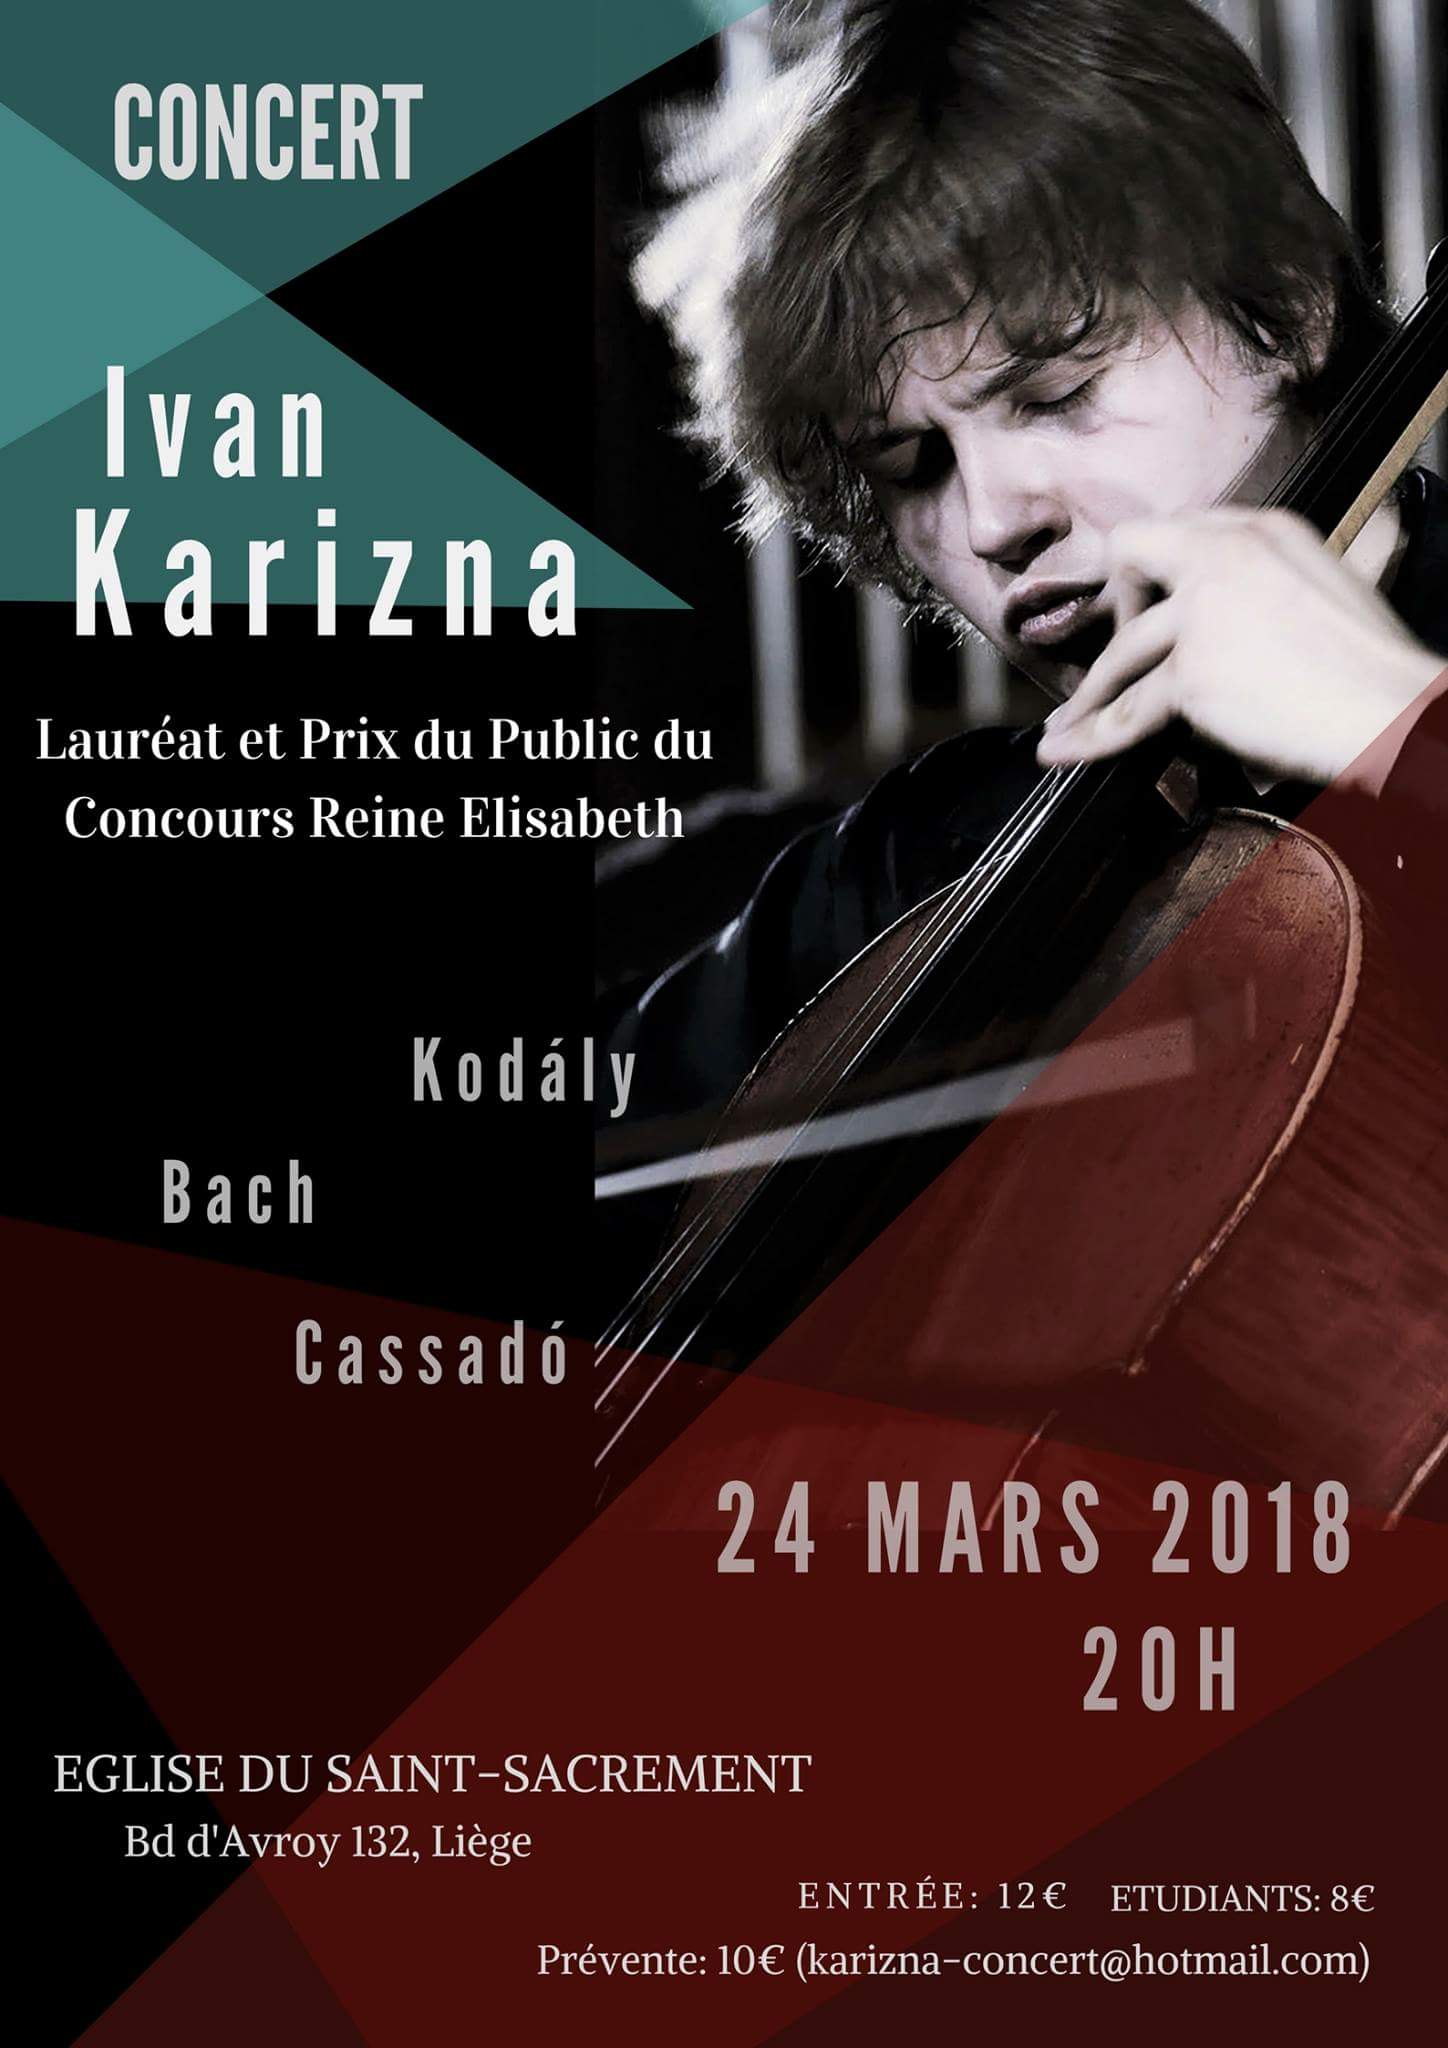 Concert Ivan Karizna : Koldaly, Bach, Cassado.